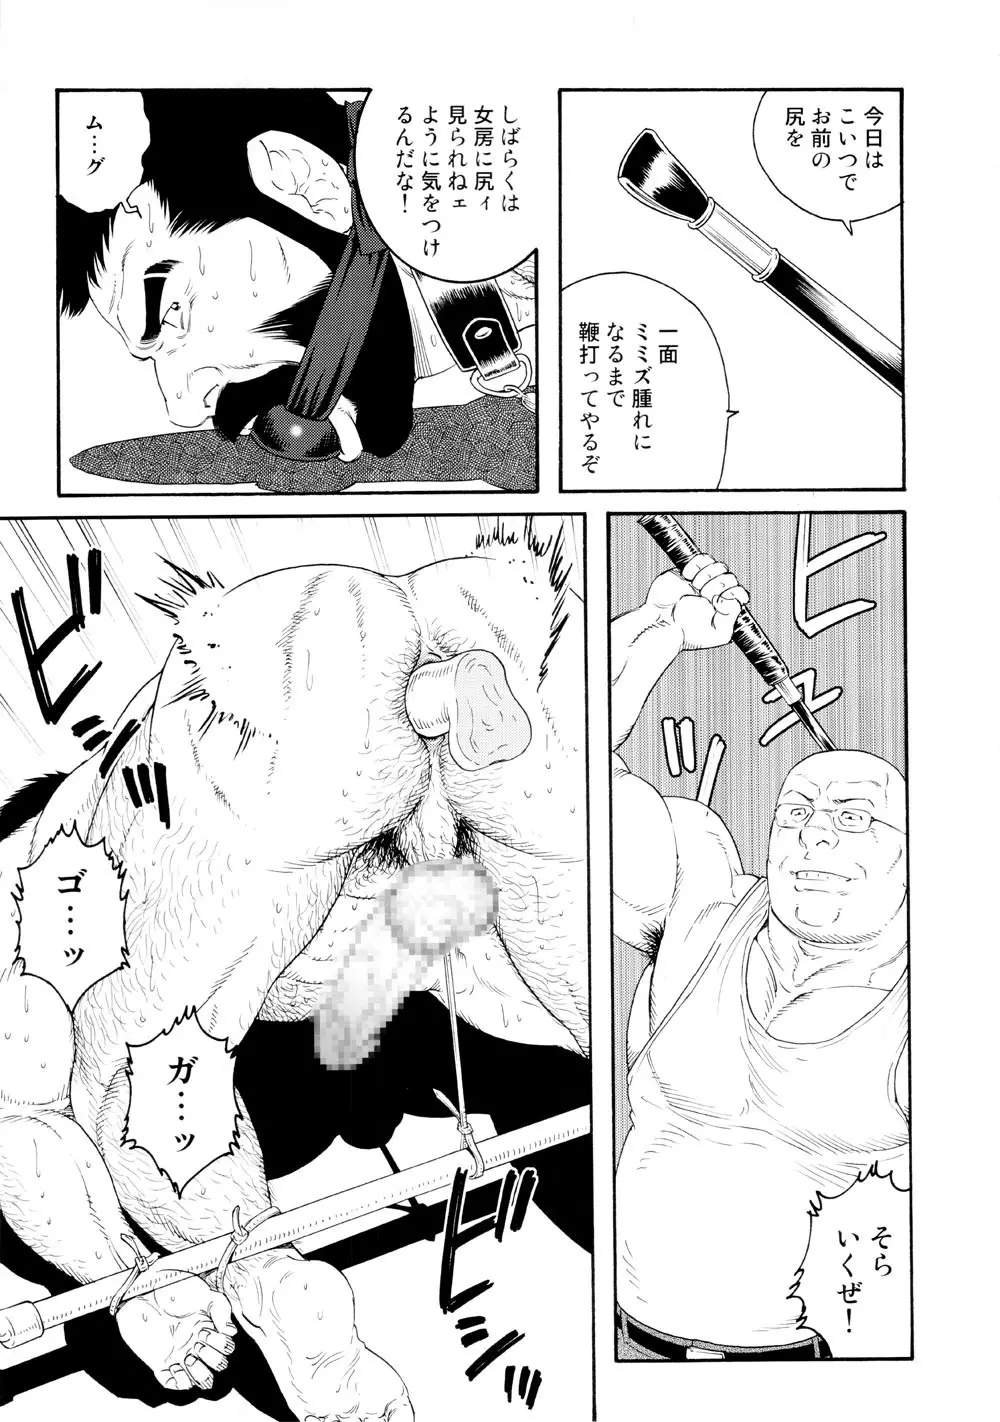 Genryu Chapter 3 11ページ